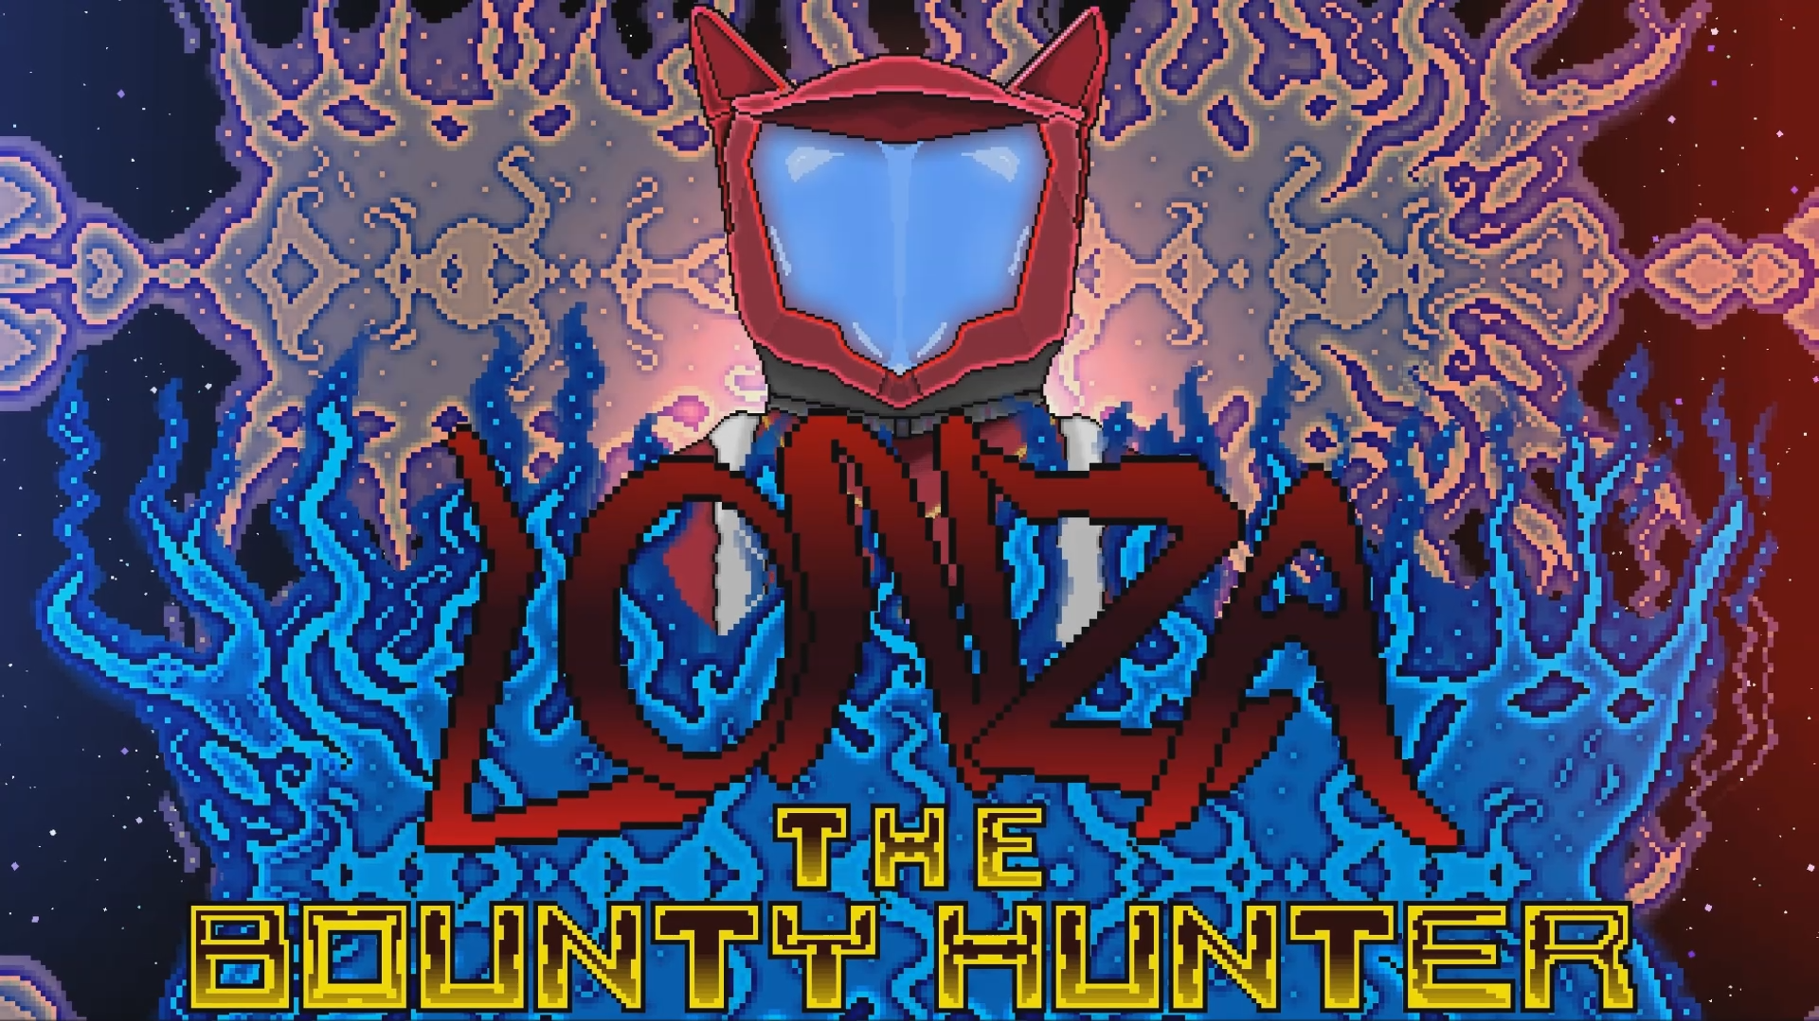 Lonza the Bounty Hunter